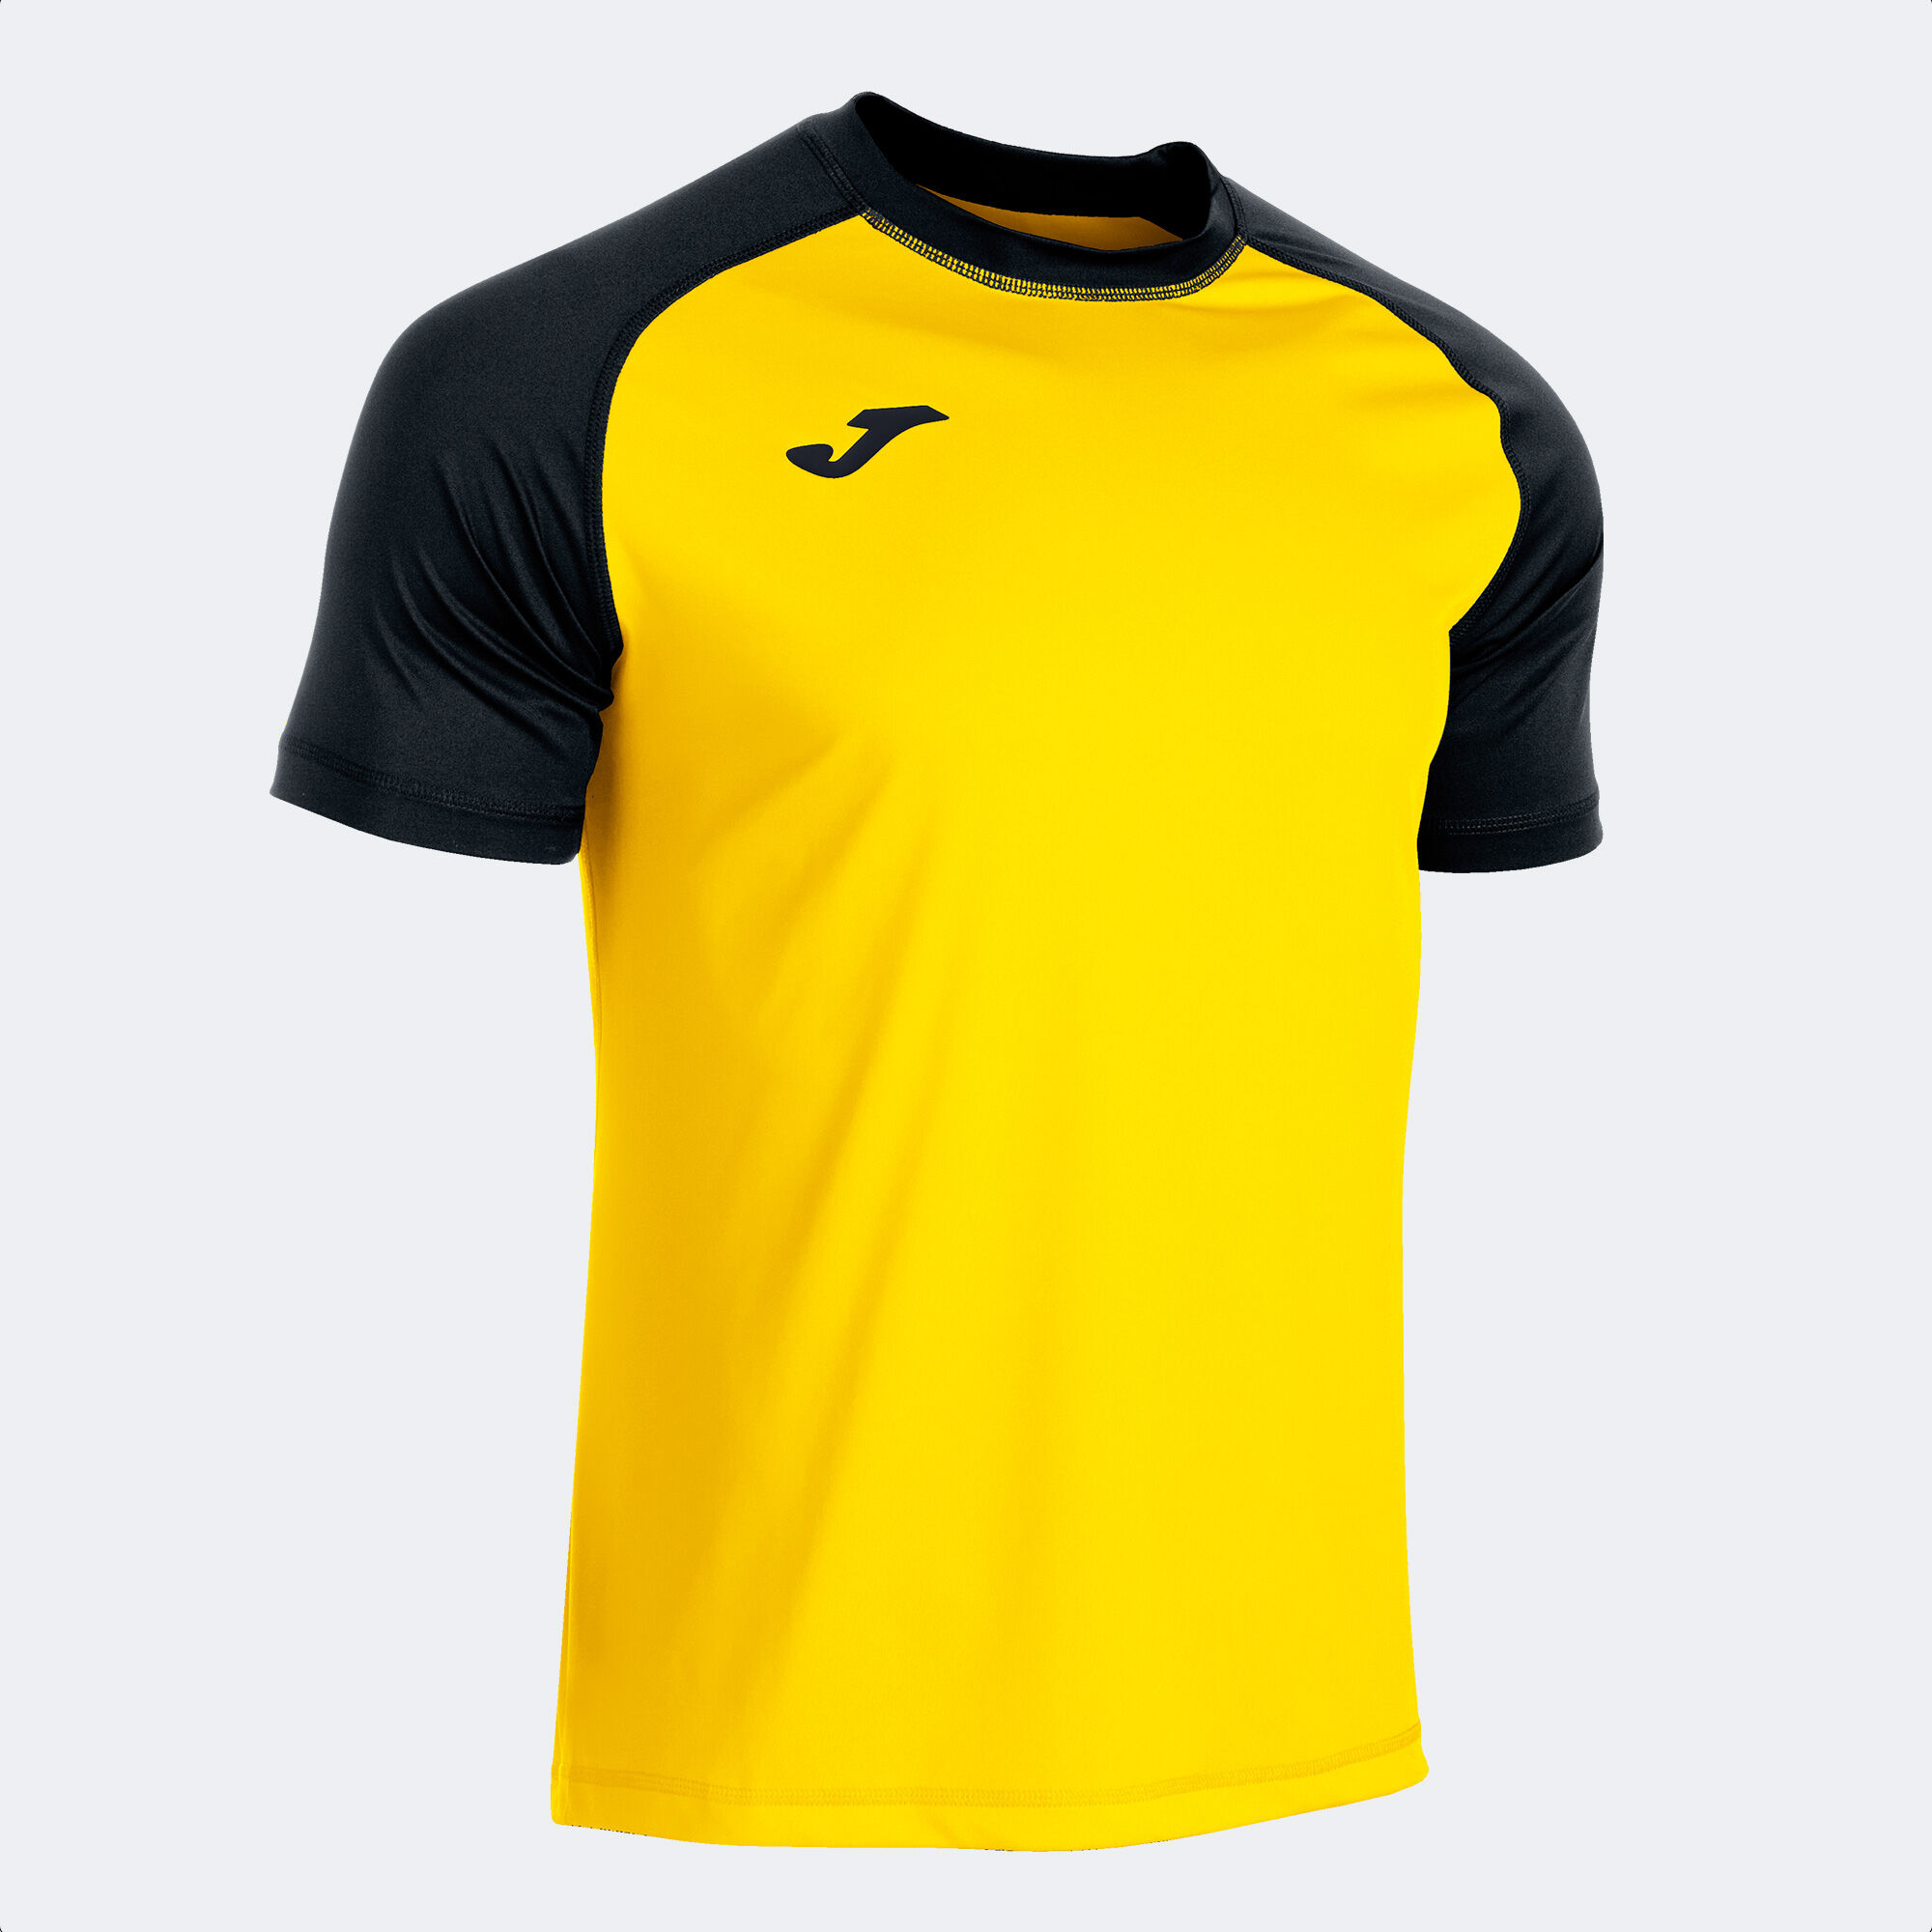 Camiseta manga corta hombre Teamwork amarillo negro JOMA®